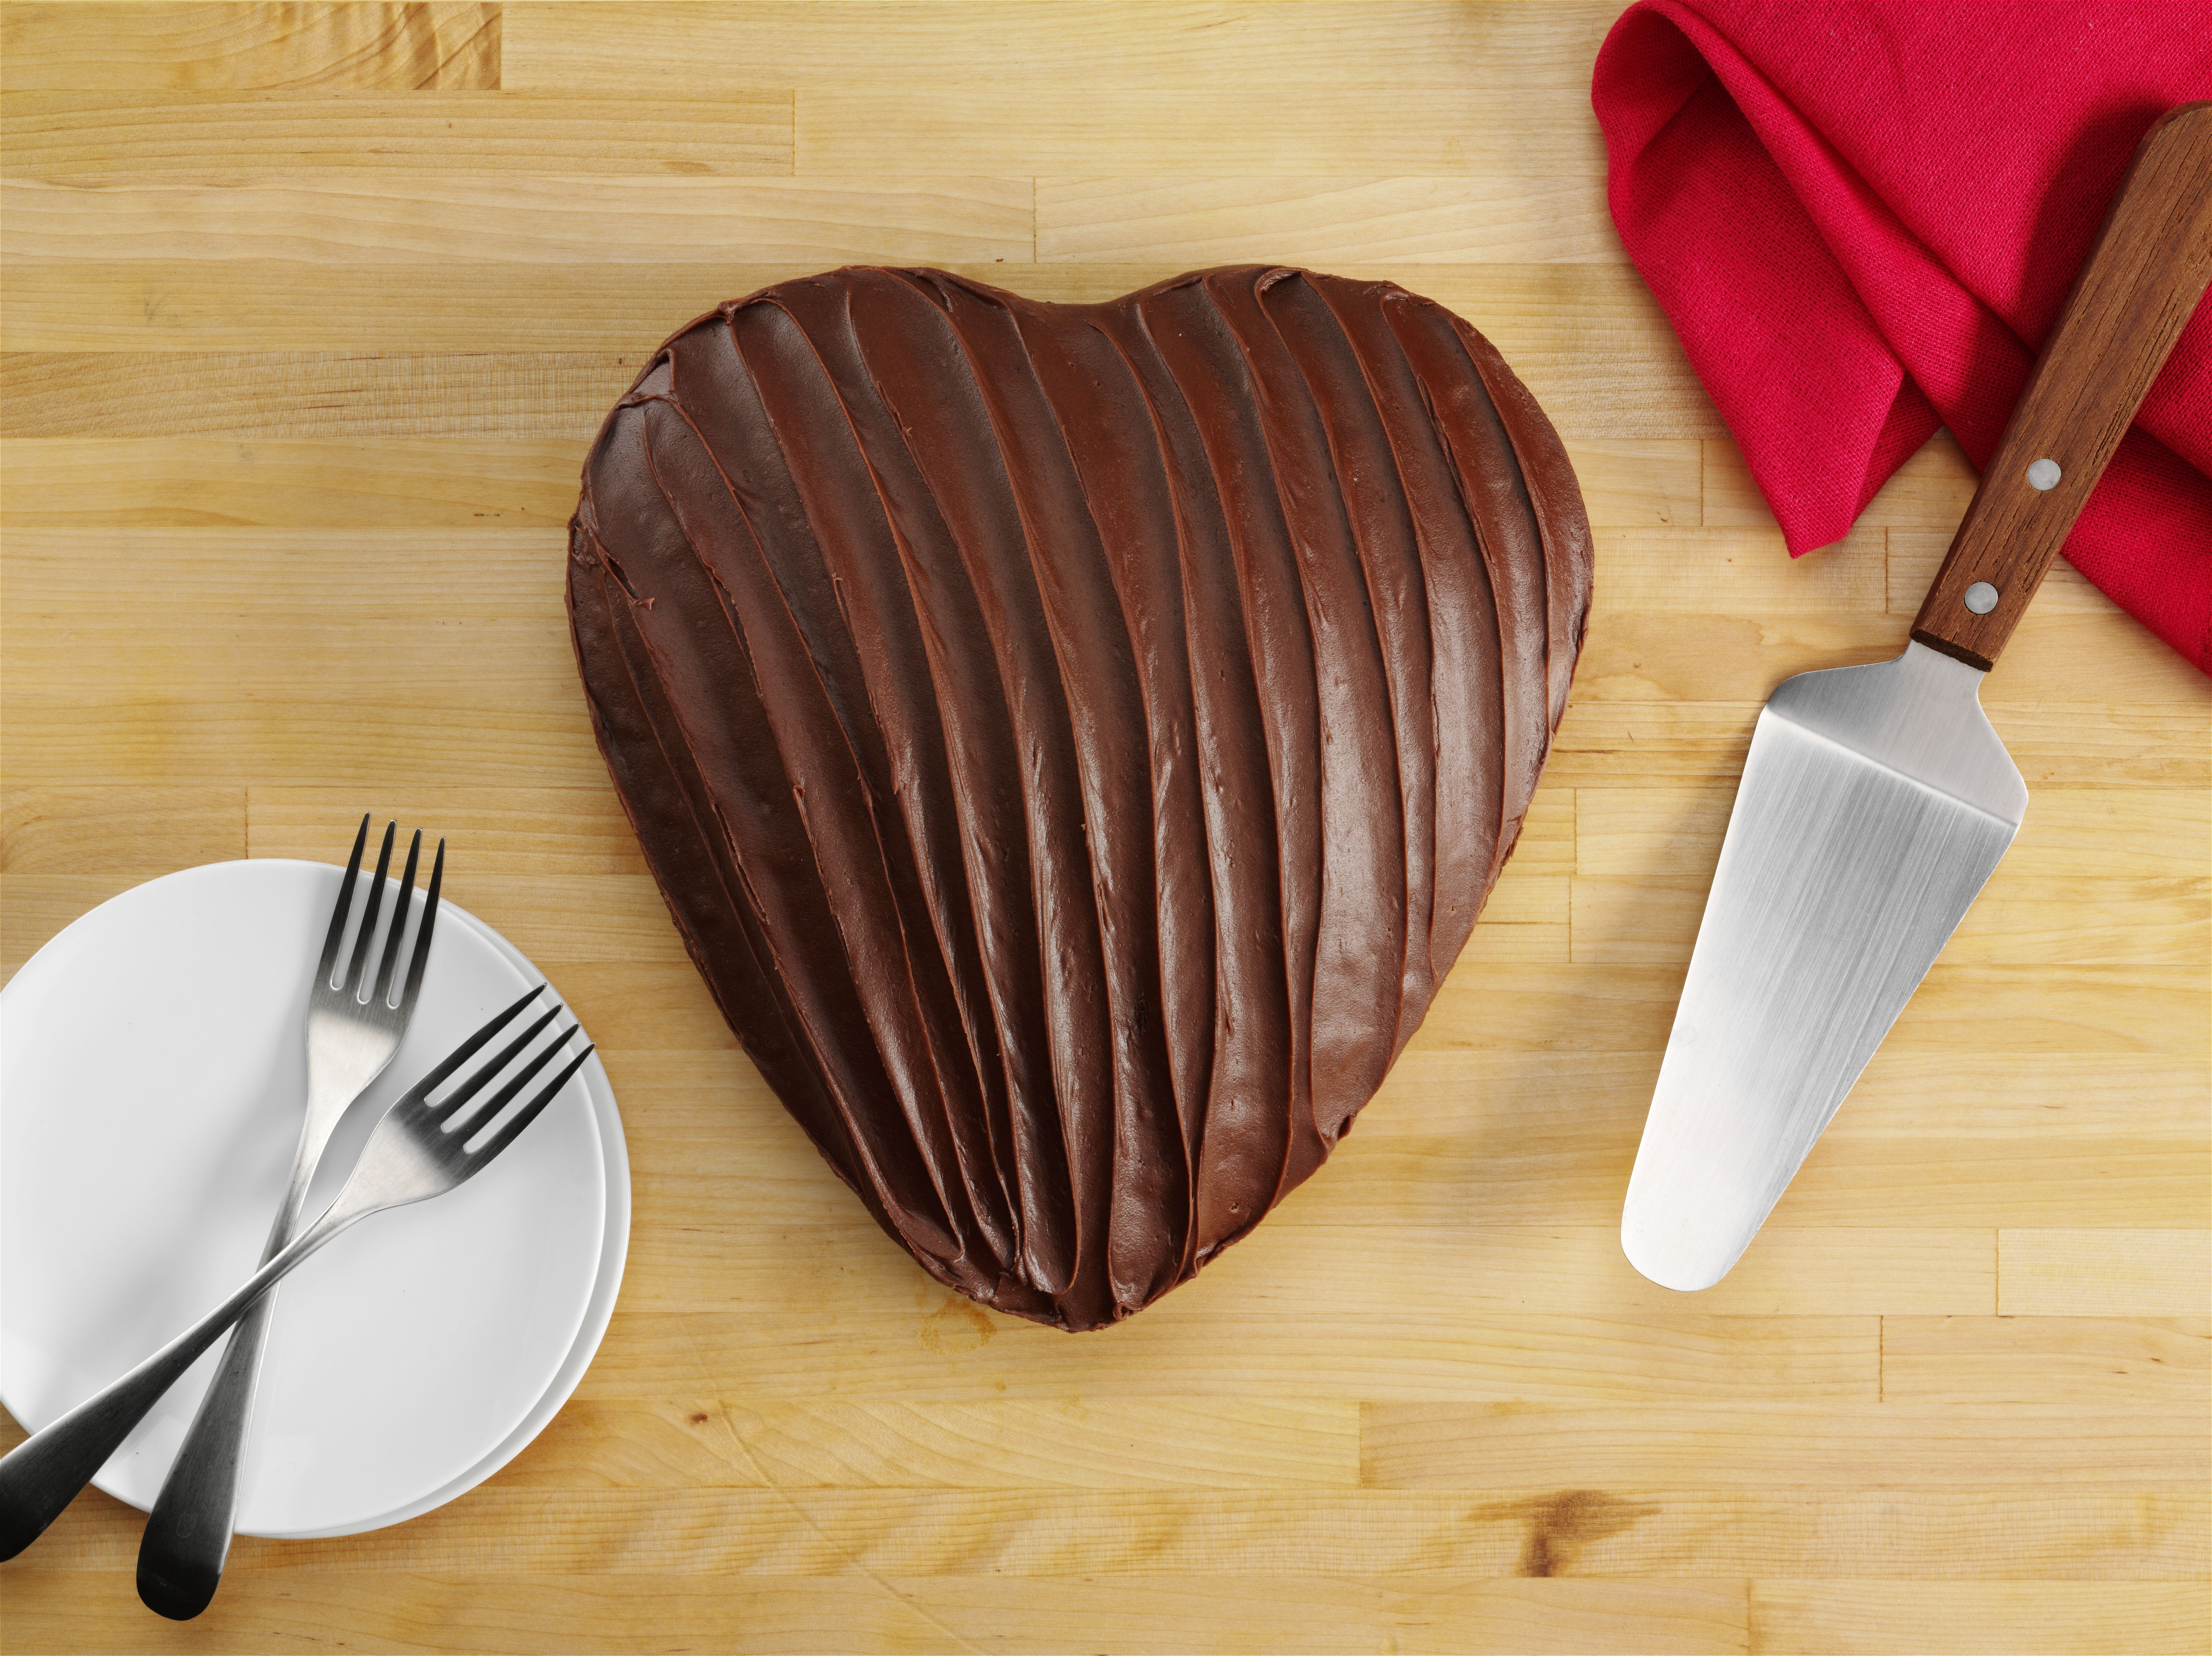 Heart-shaped cake by Portillo's